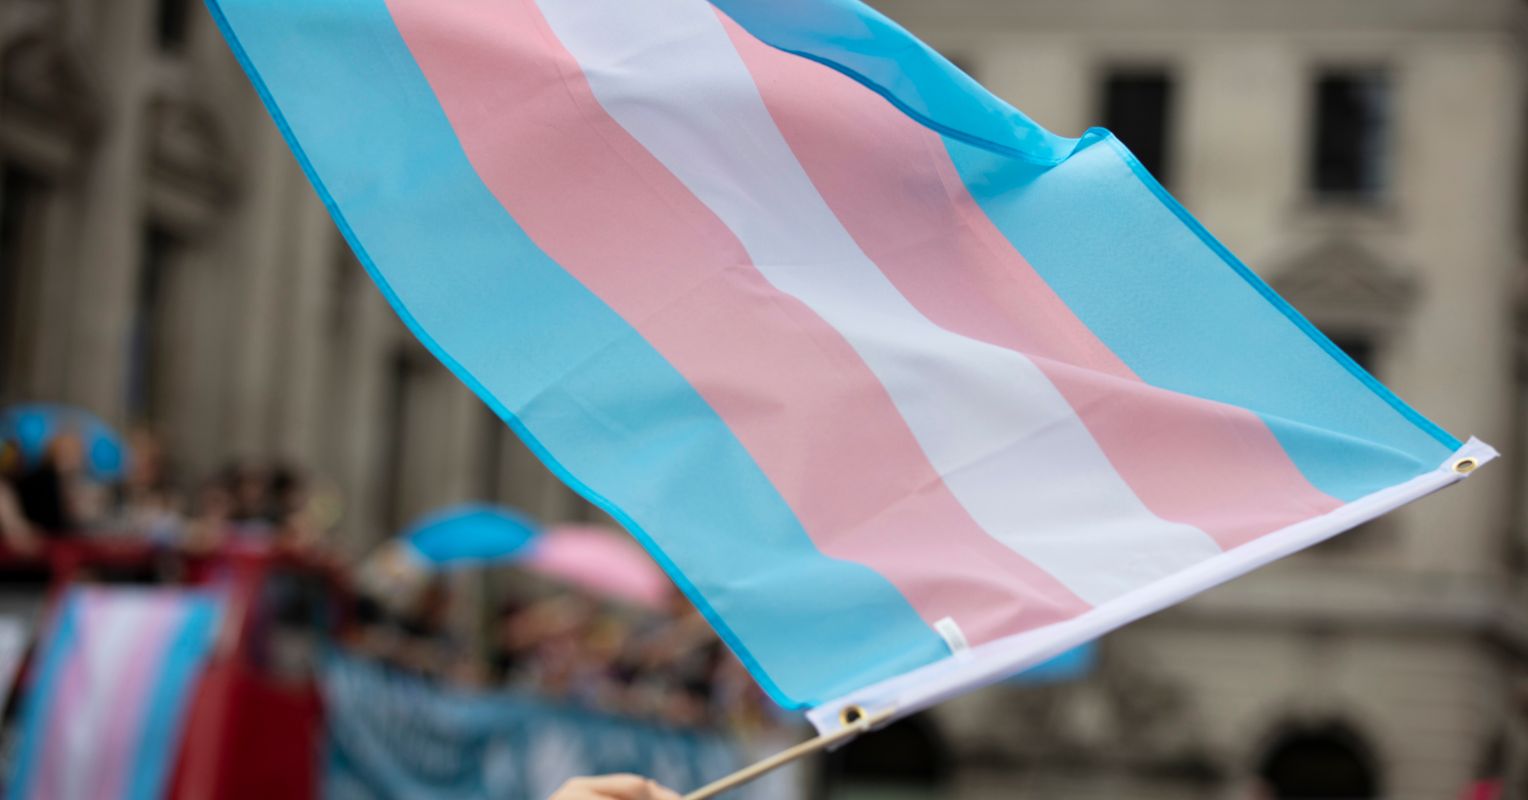 Washington Dc Transsexuals - Transgender | Psychology Today